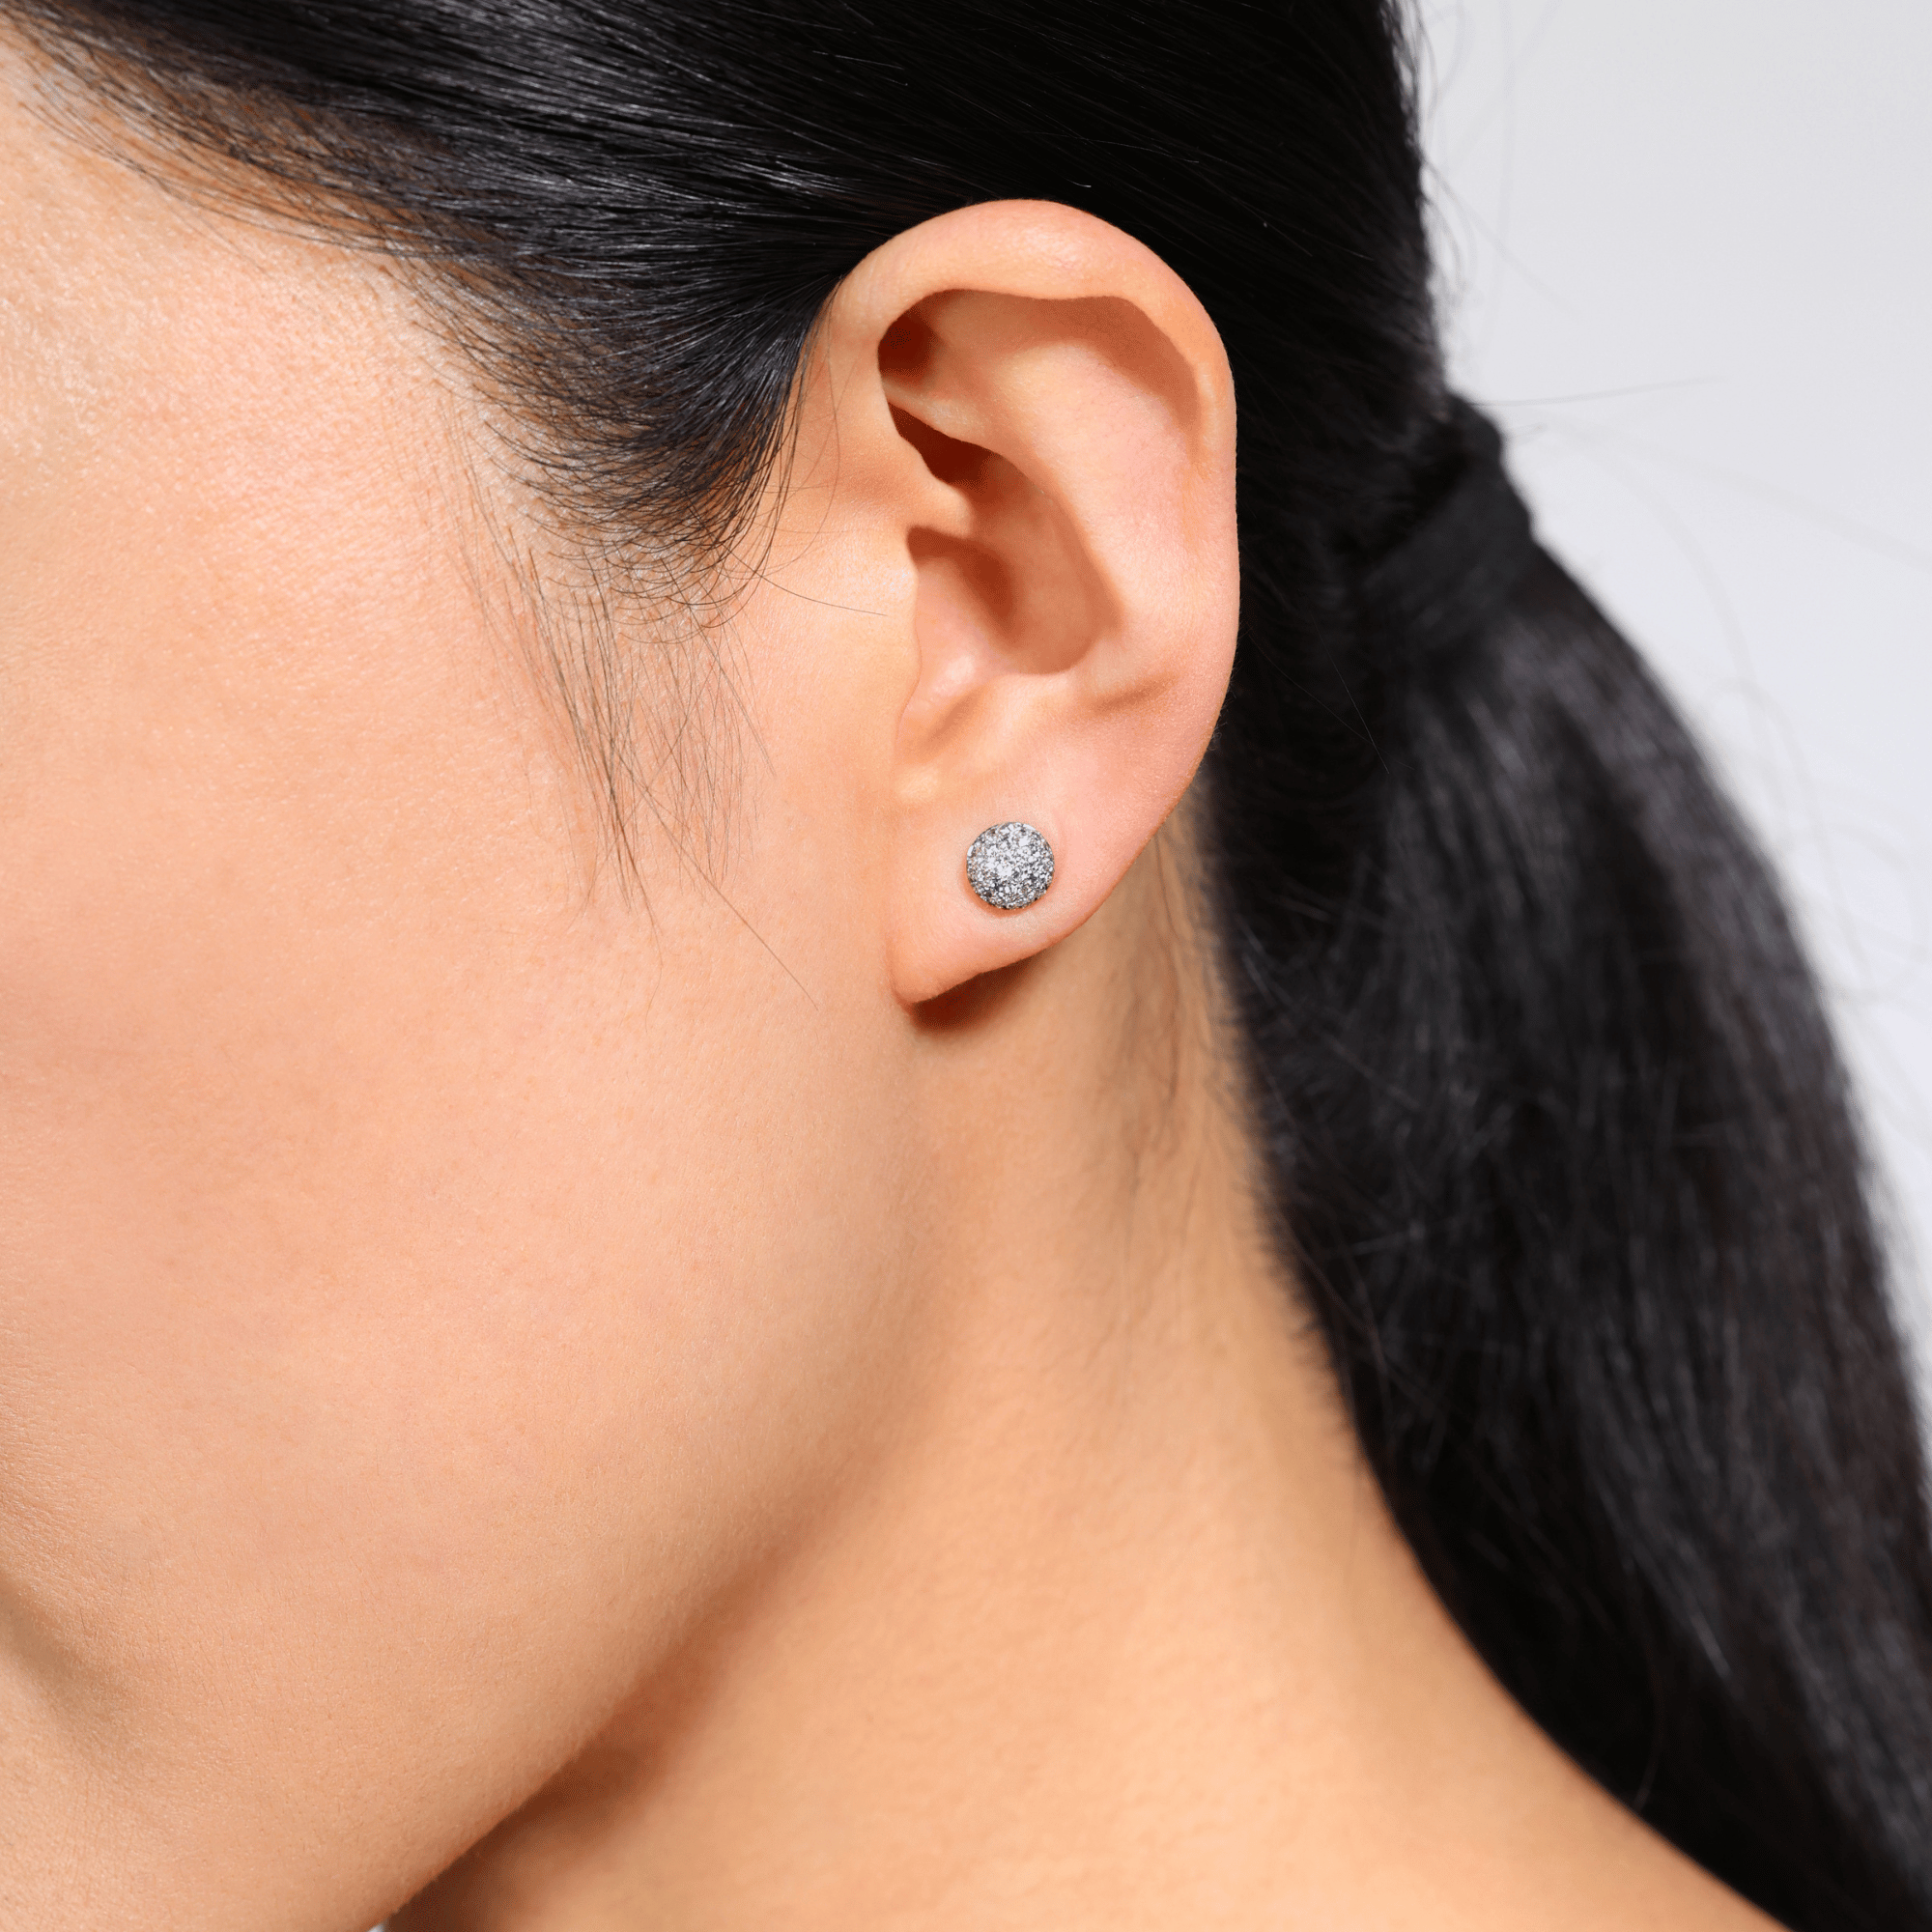 Diamond & pink sapphire pave stud earrings